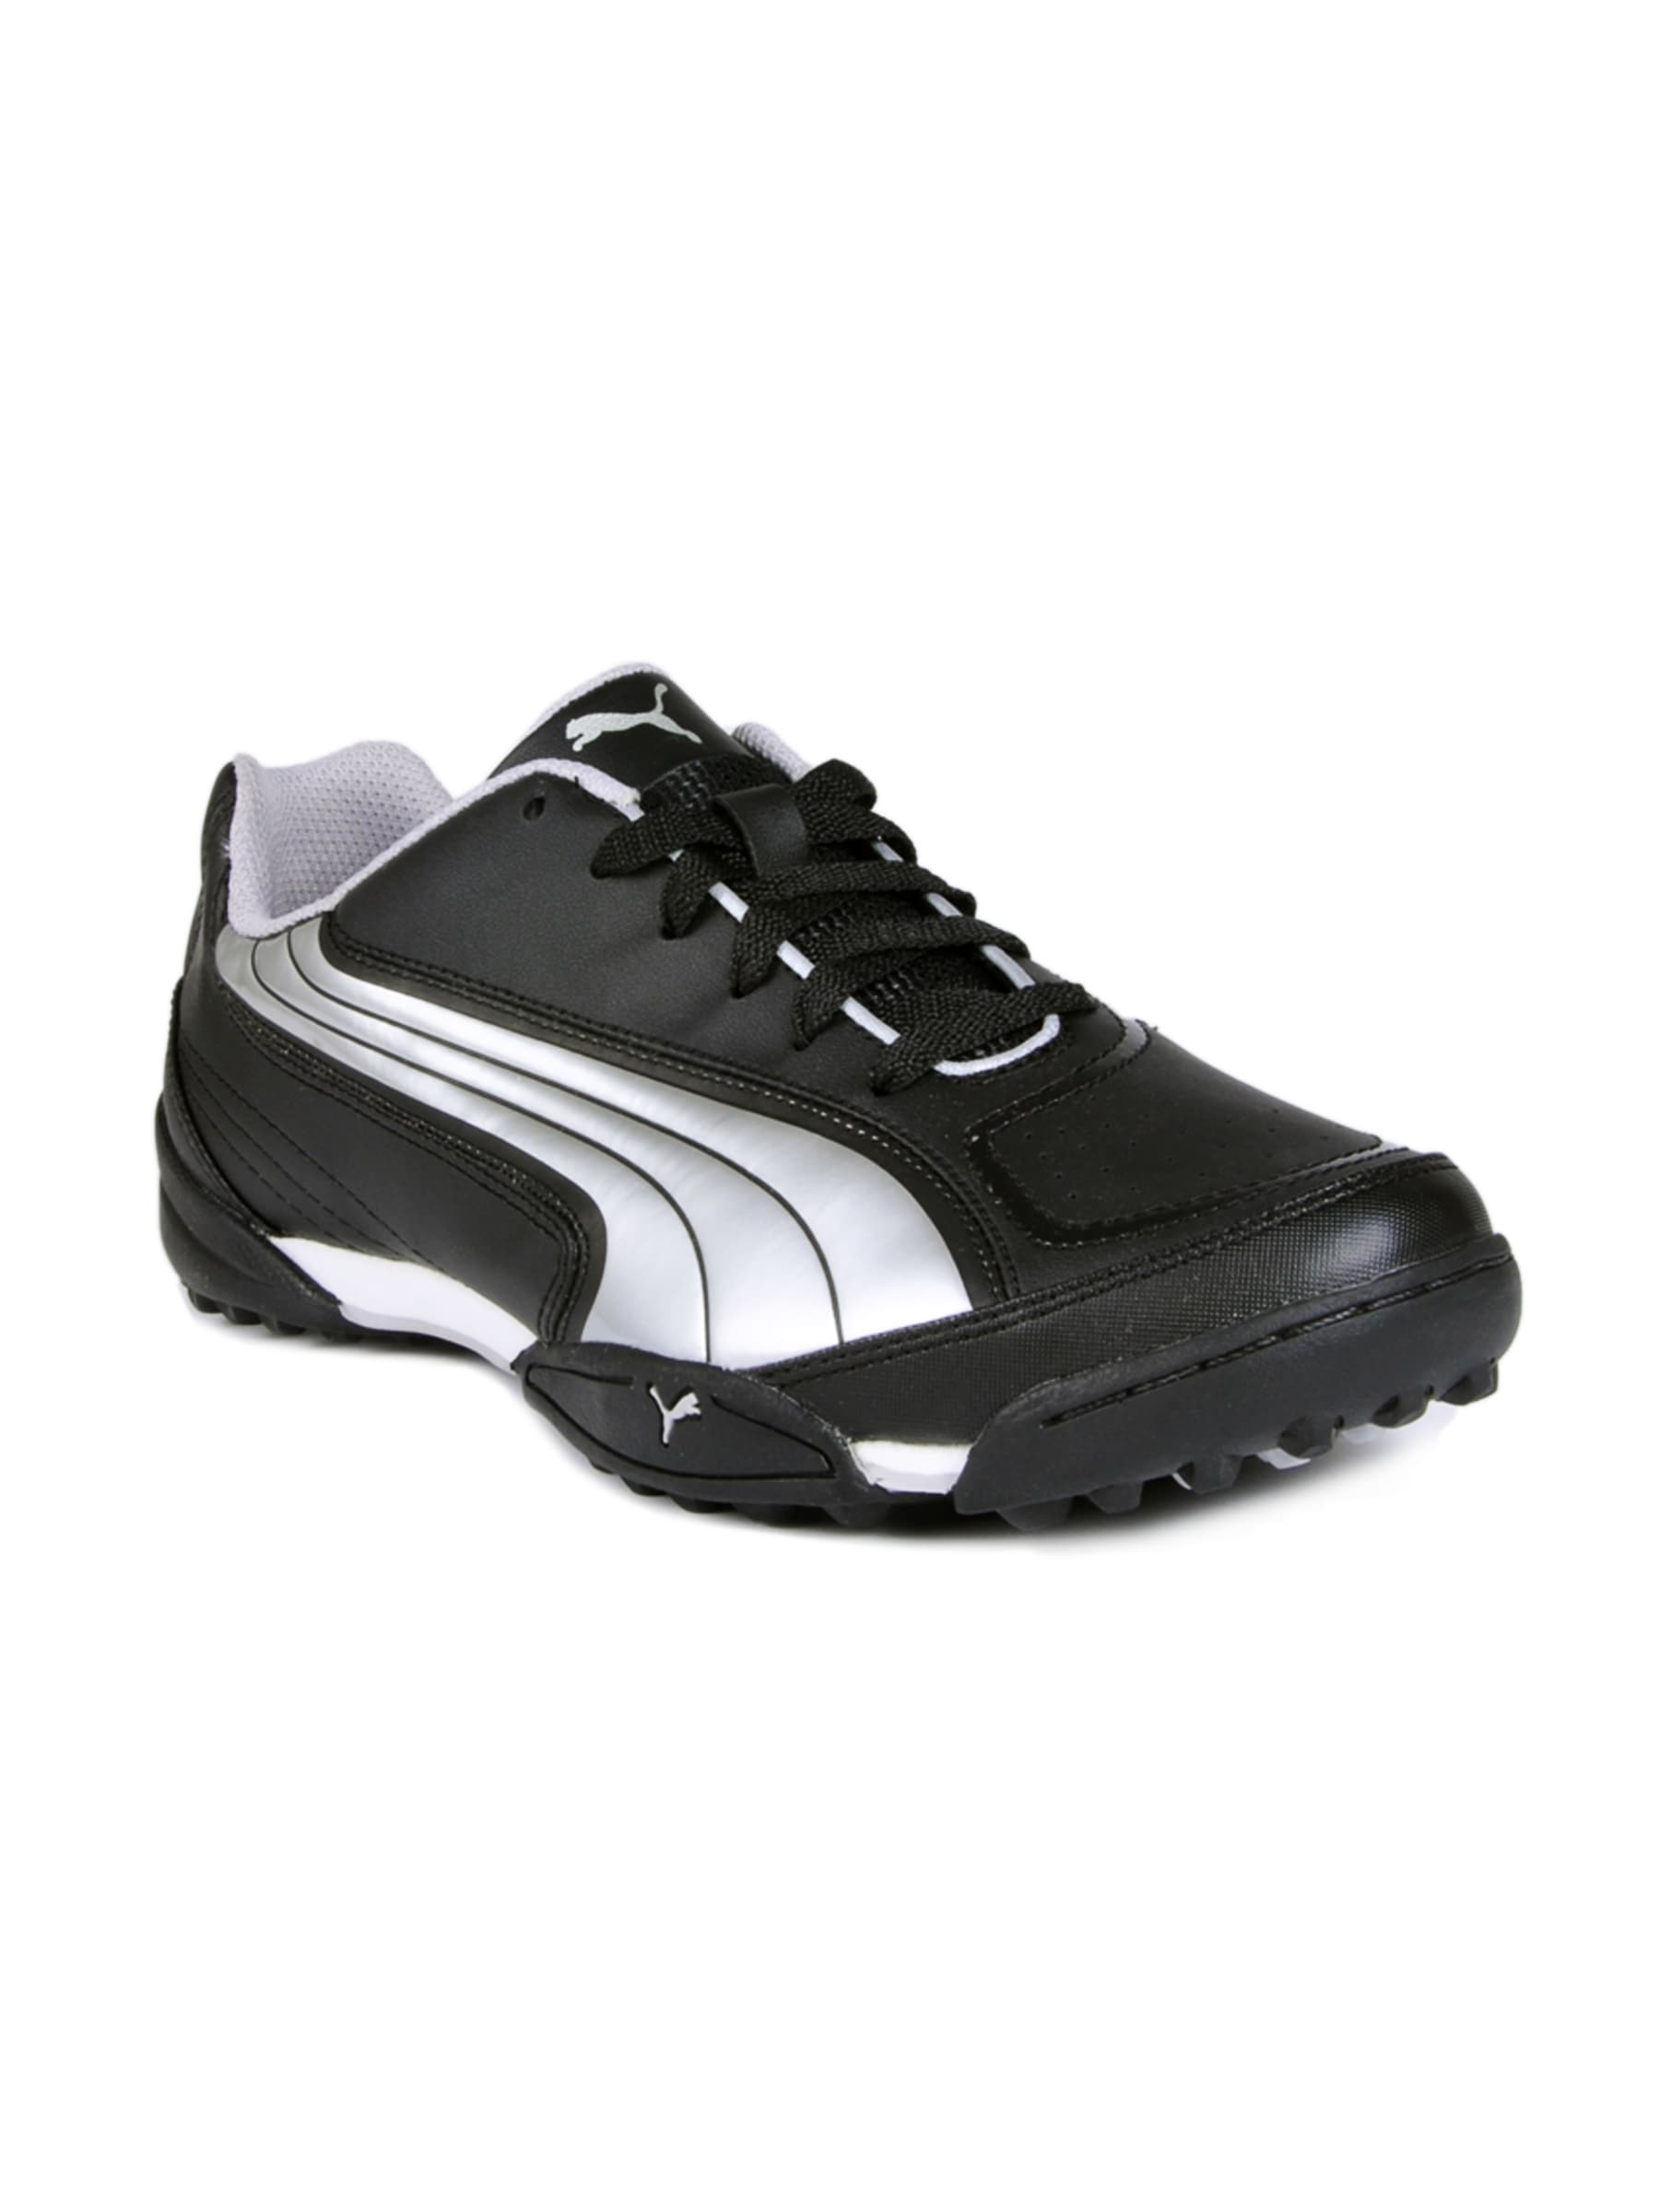 Puma Men Ean-13 Black Casual Shoes